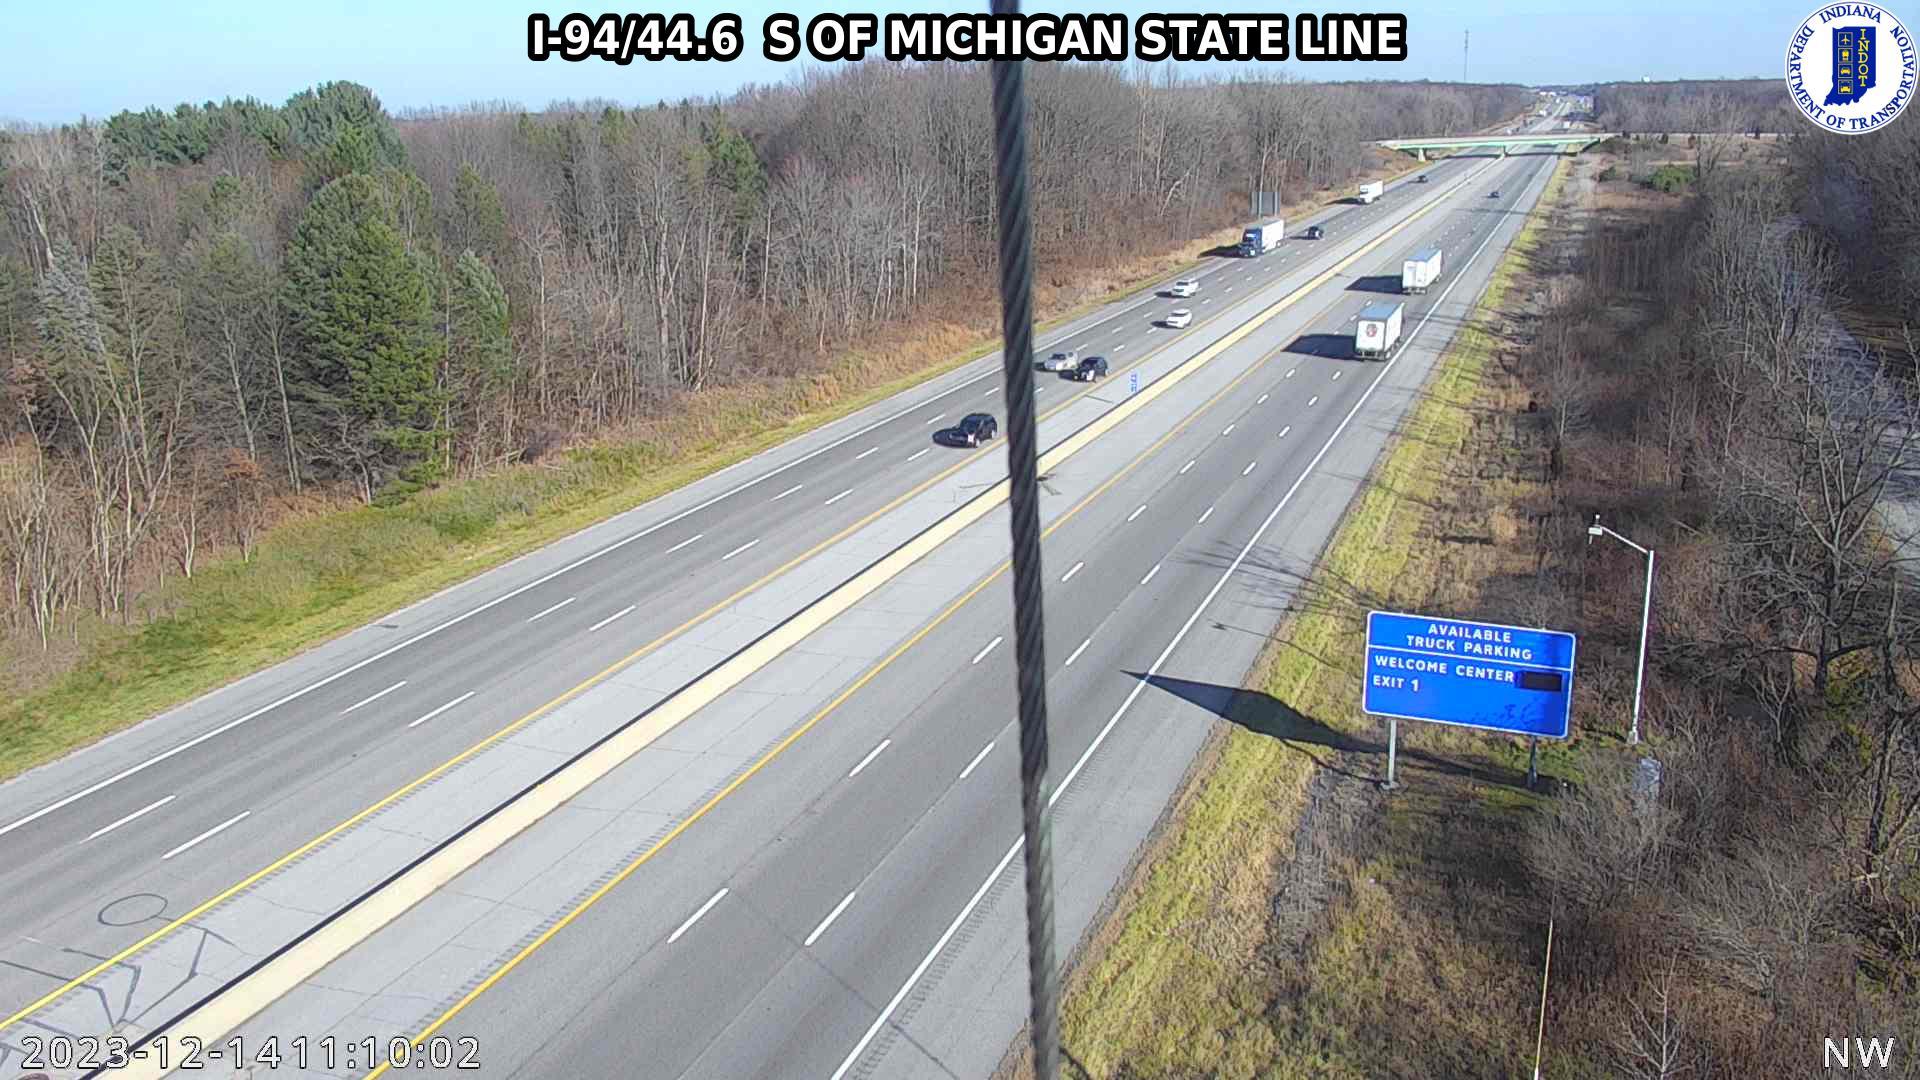 Traffic Cam Andry: I-94: I-94/44.6 S OF MICHIGAN STATE LINE: I-94/44.6 S OF MICHIGAN STATE LINE